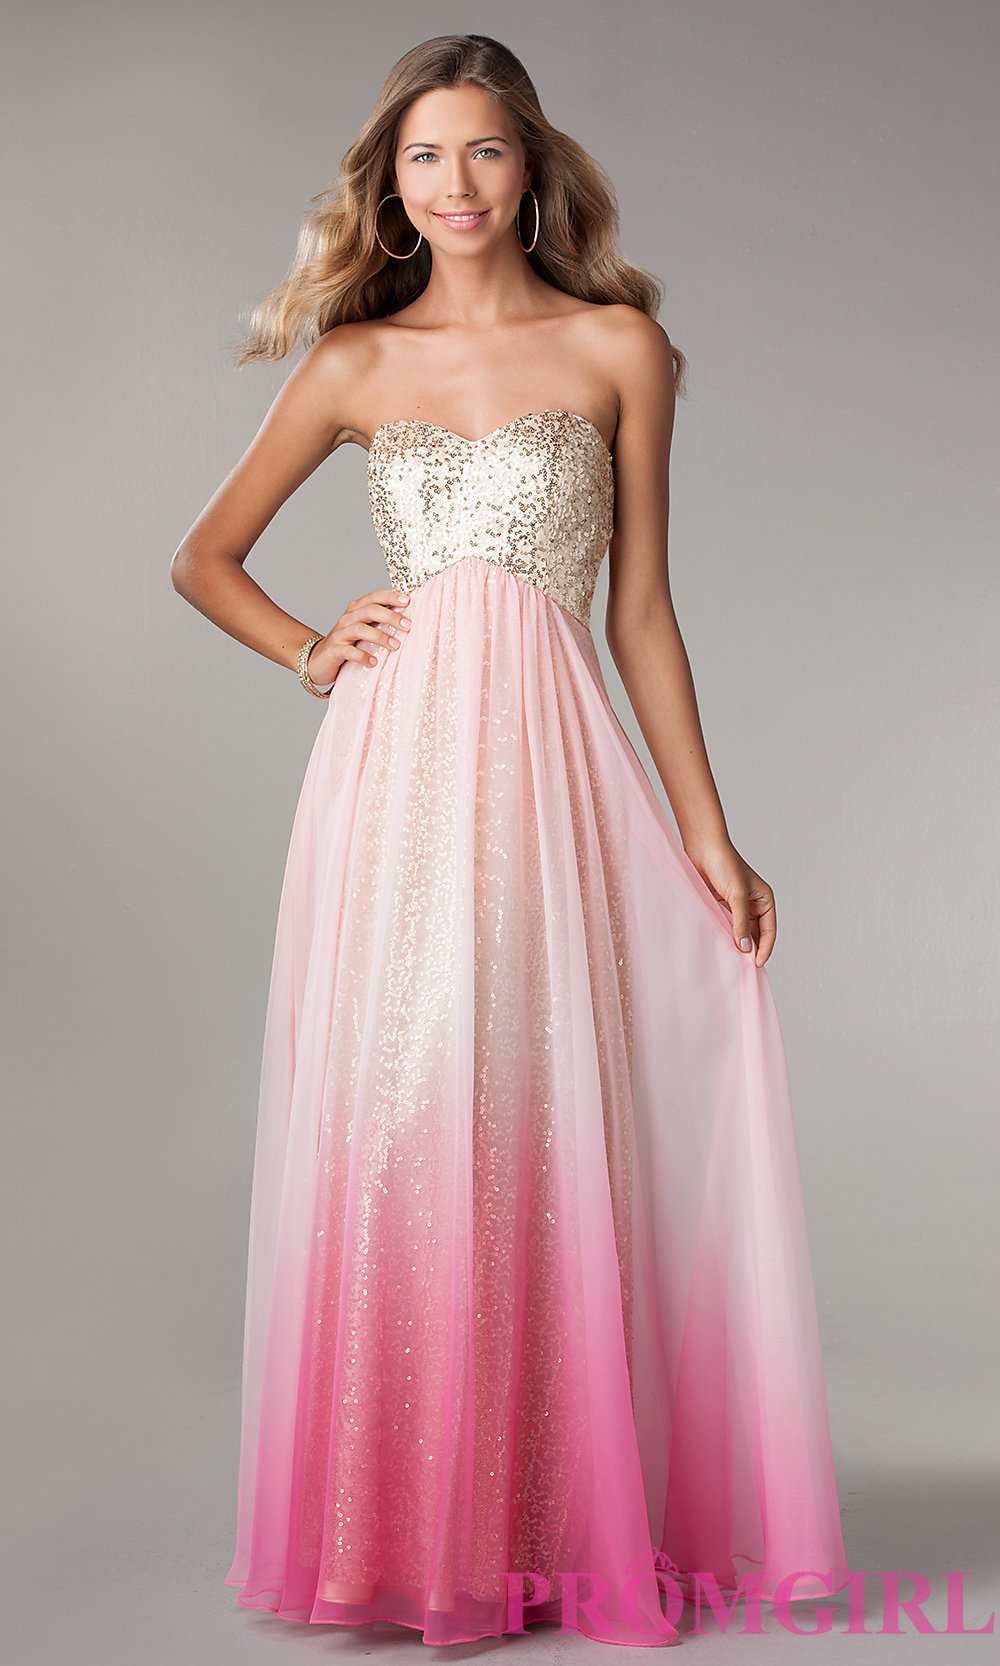 Pink And Gold Glitter Dress : Look Like A Princess 2017